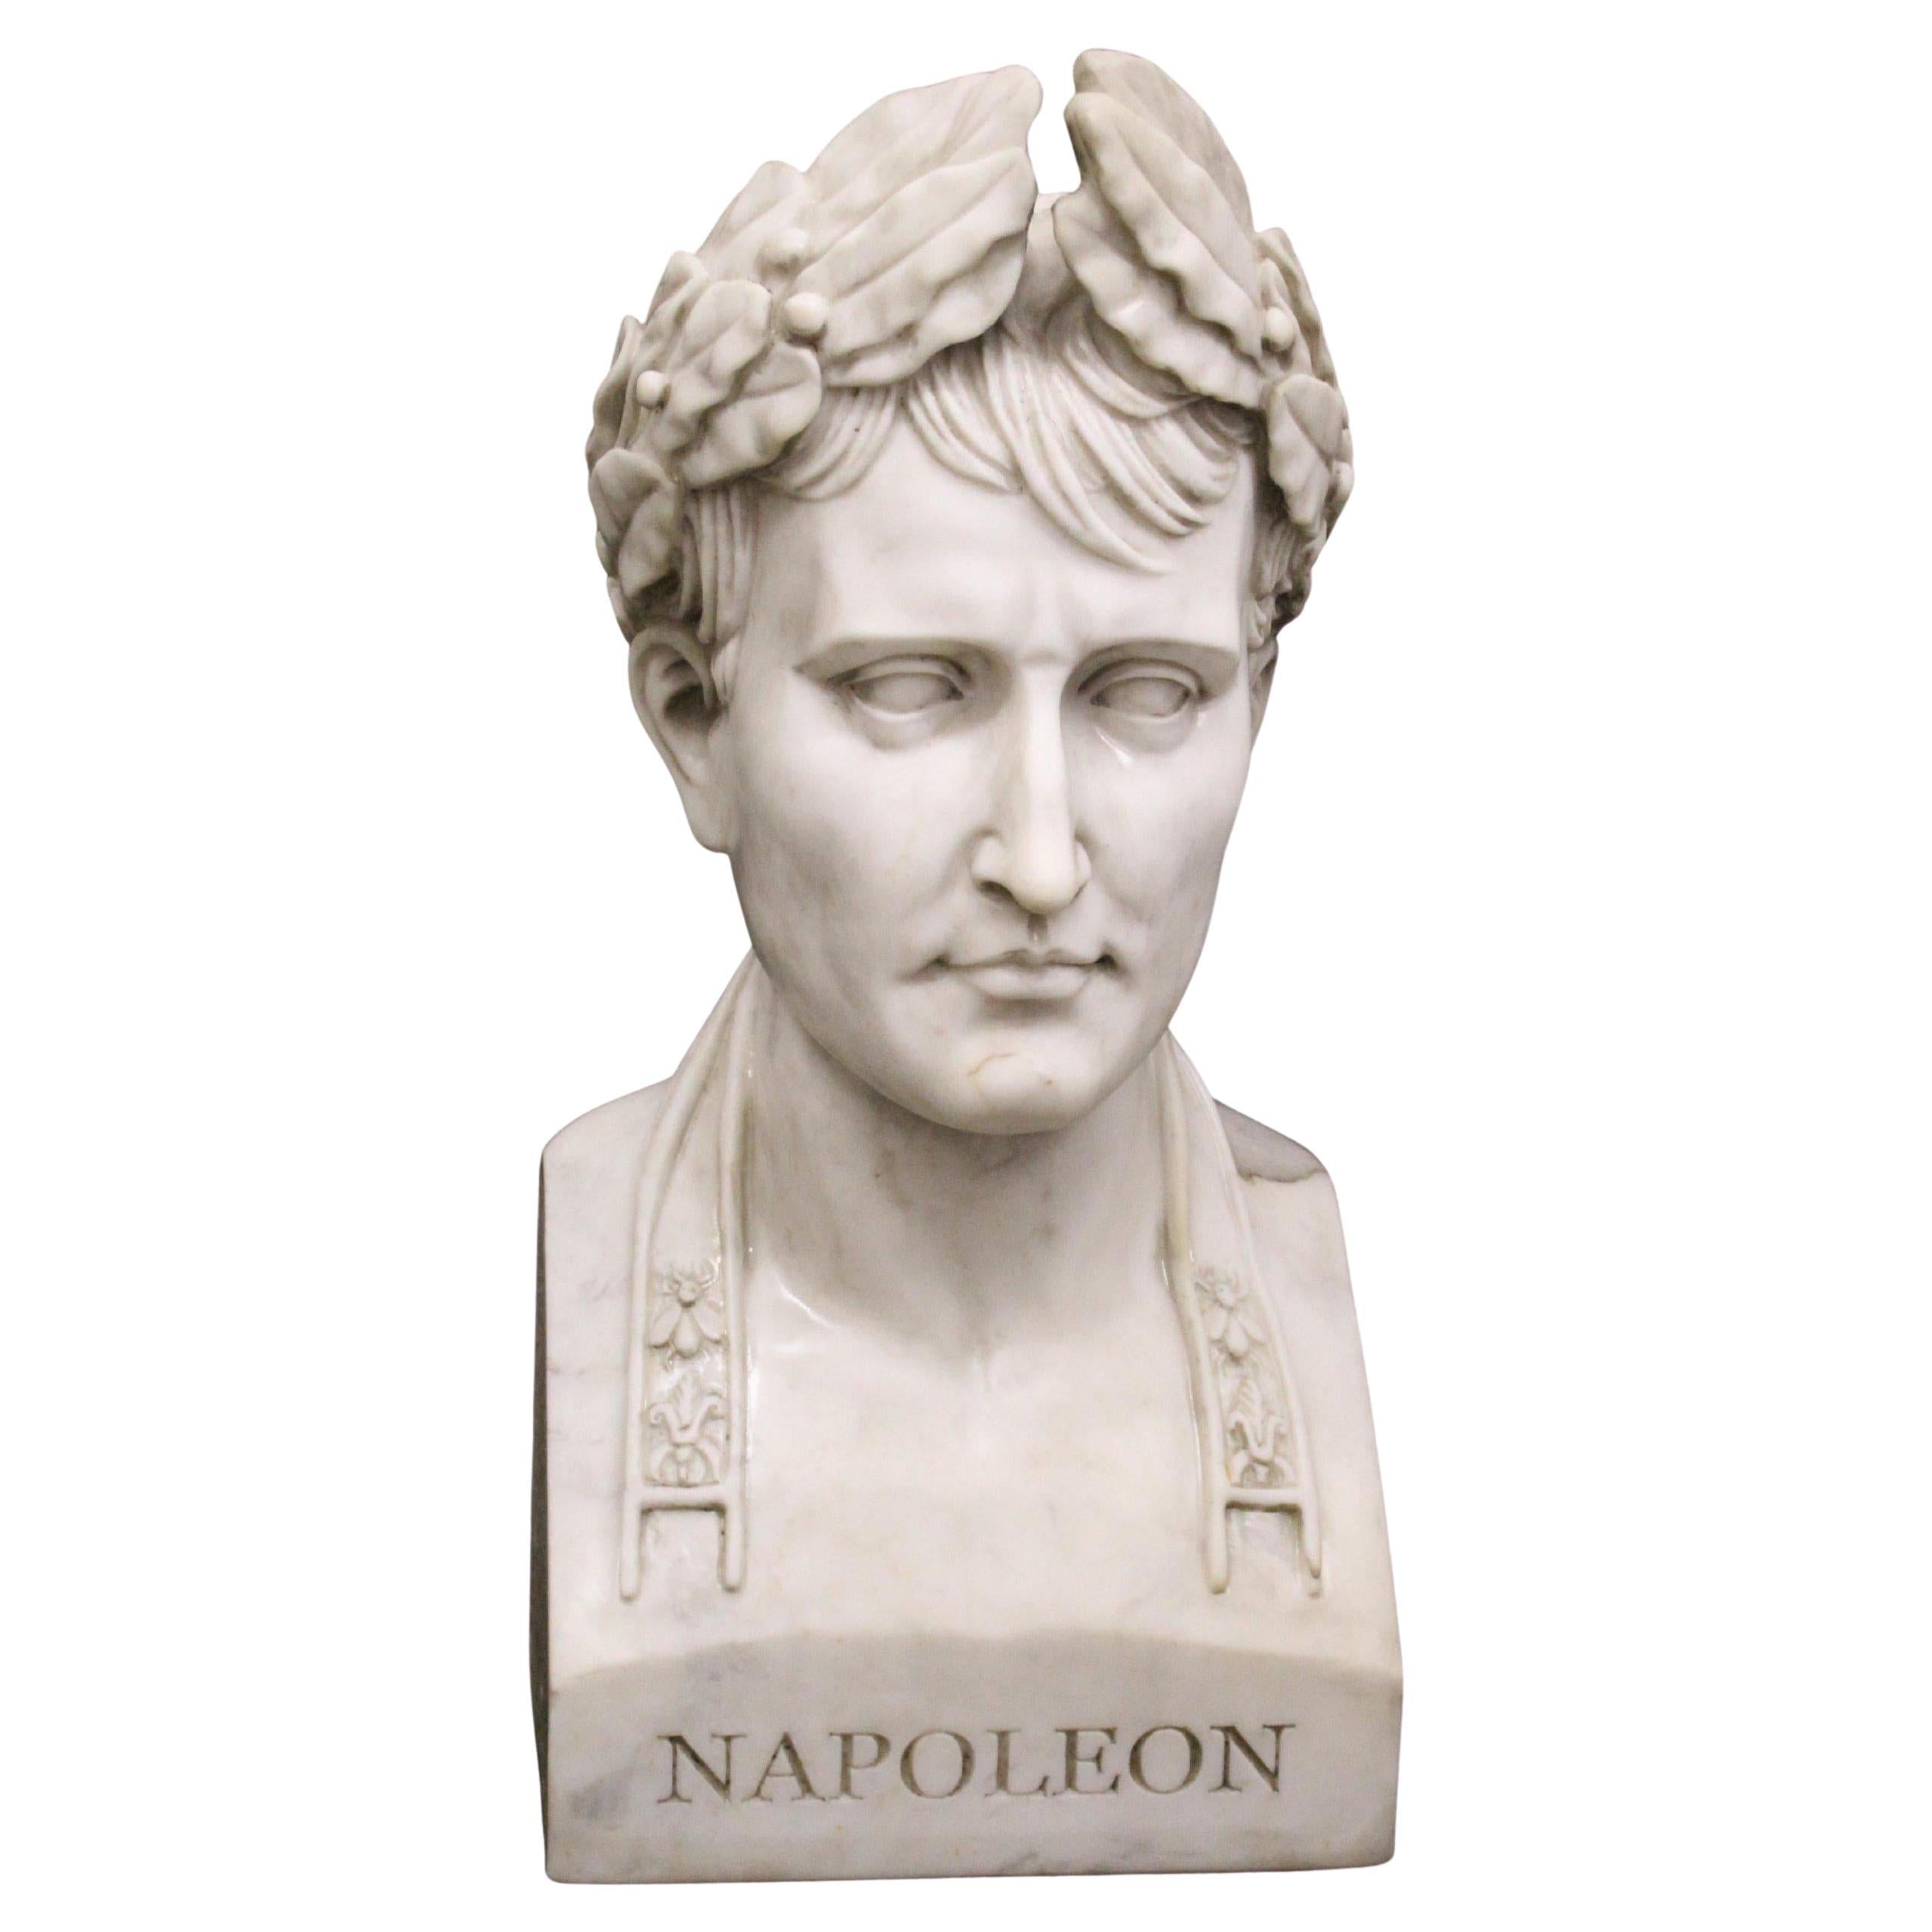 Napoleon from the model of Lorenzo Bartolini, Bust in Carrara marble, sculpture